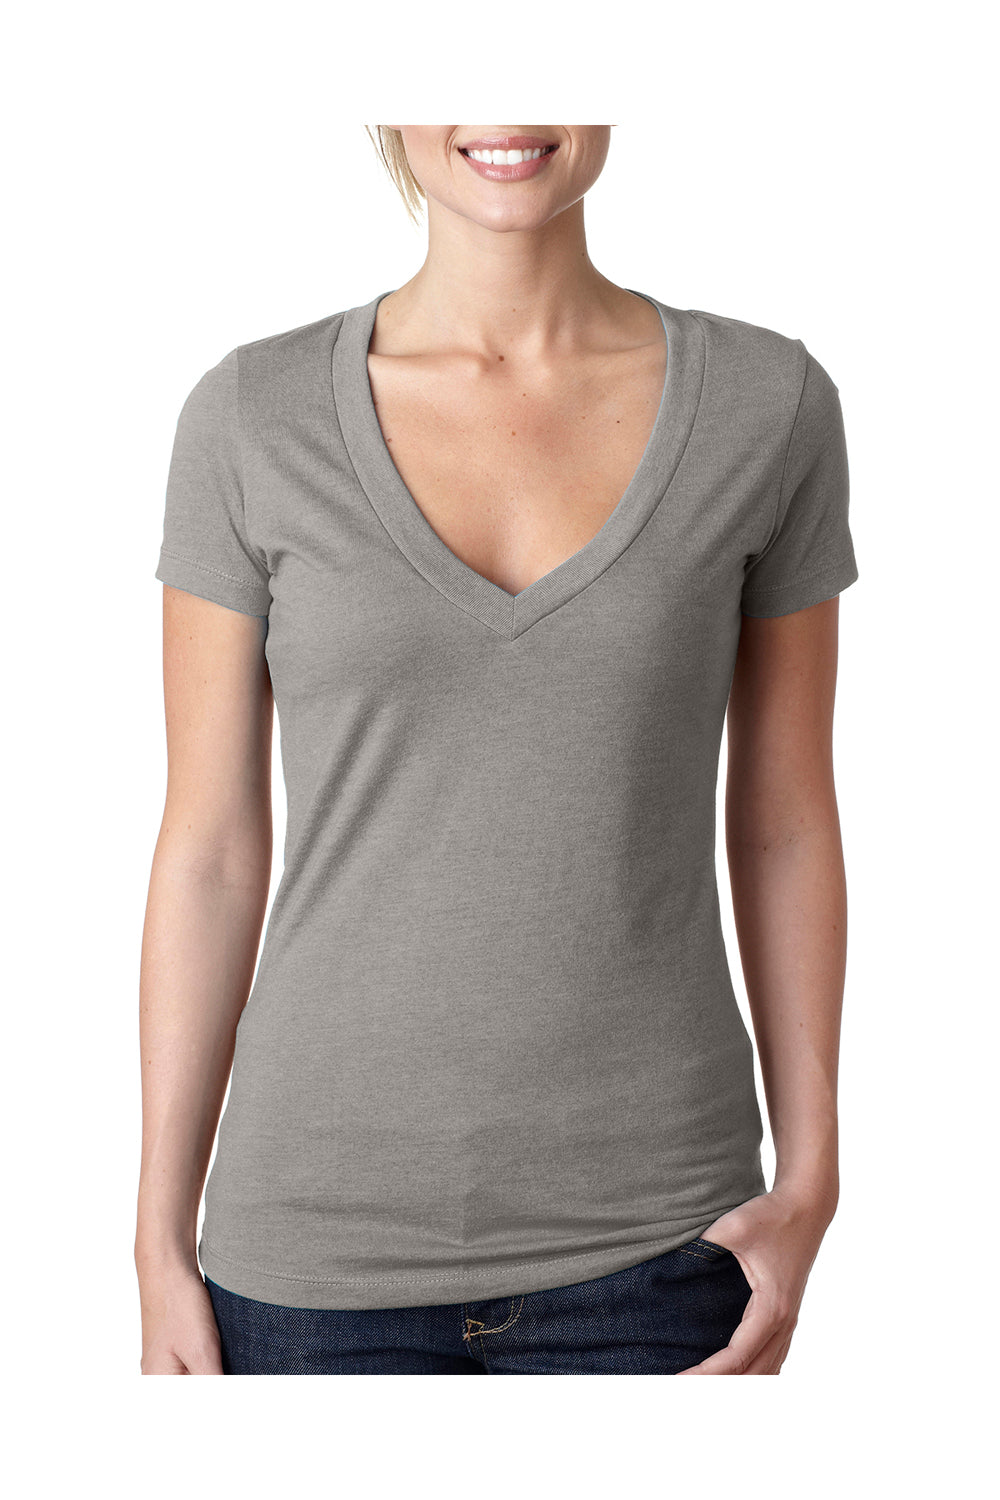 Next Level 6640 Womens CVC Jersey Short Sleeve V-Neck T-Shirt Stone Grey Front